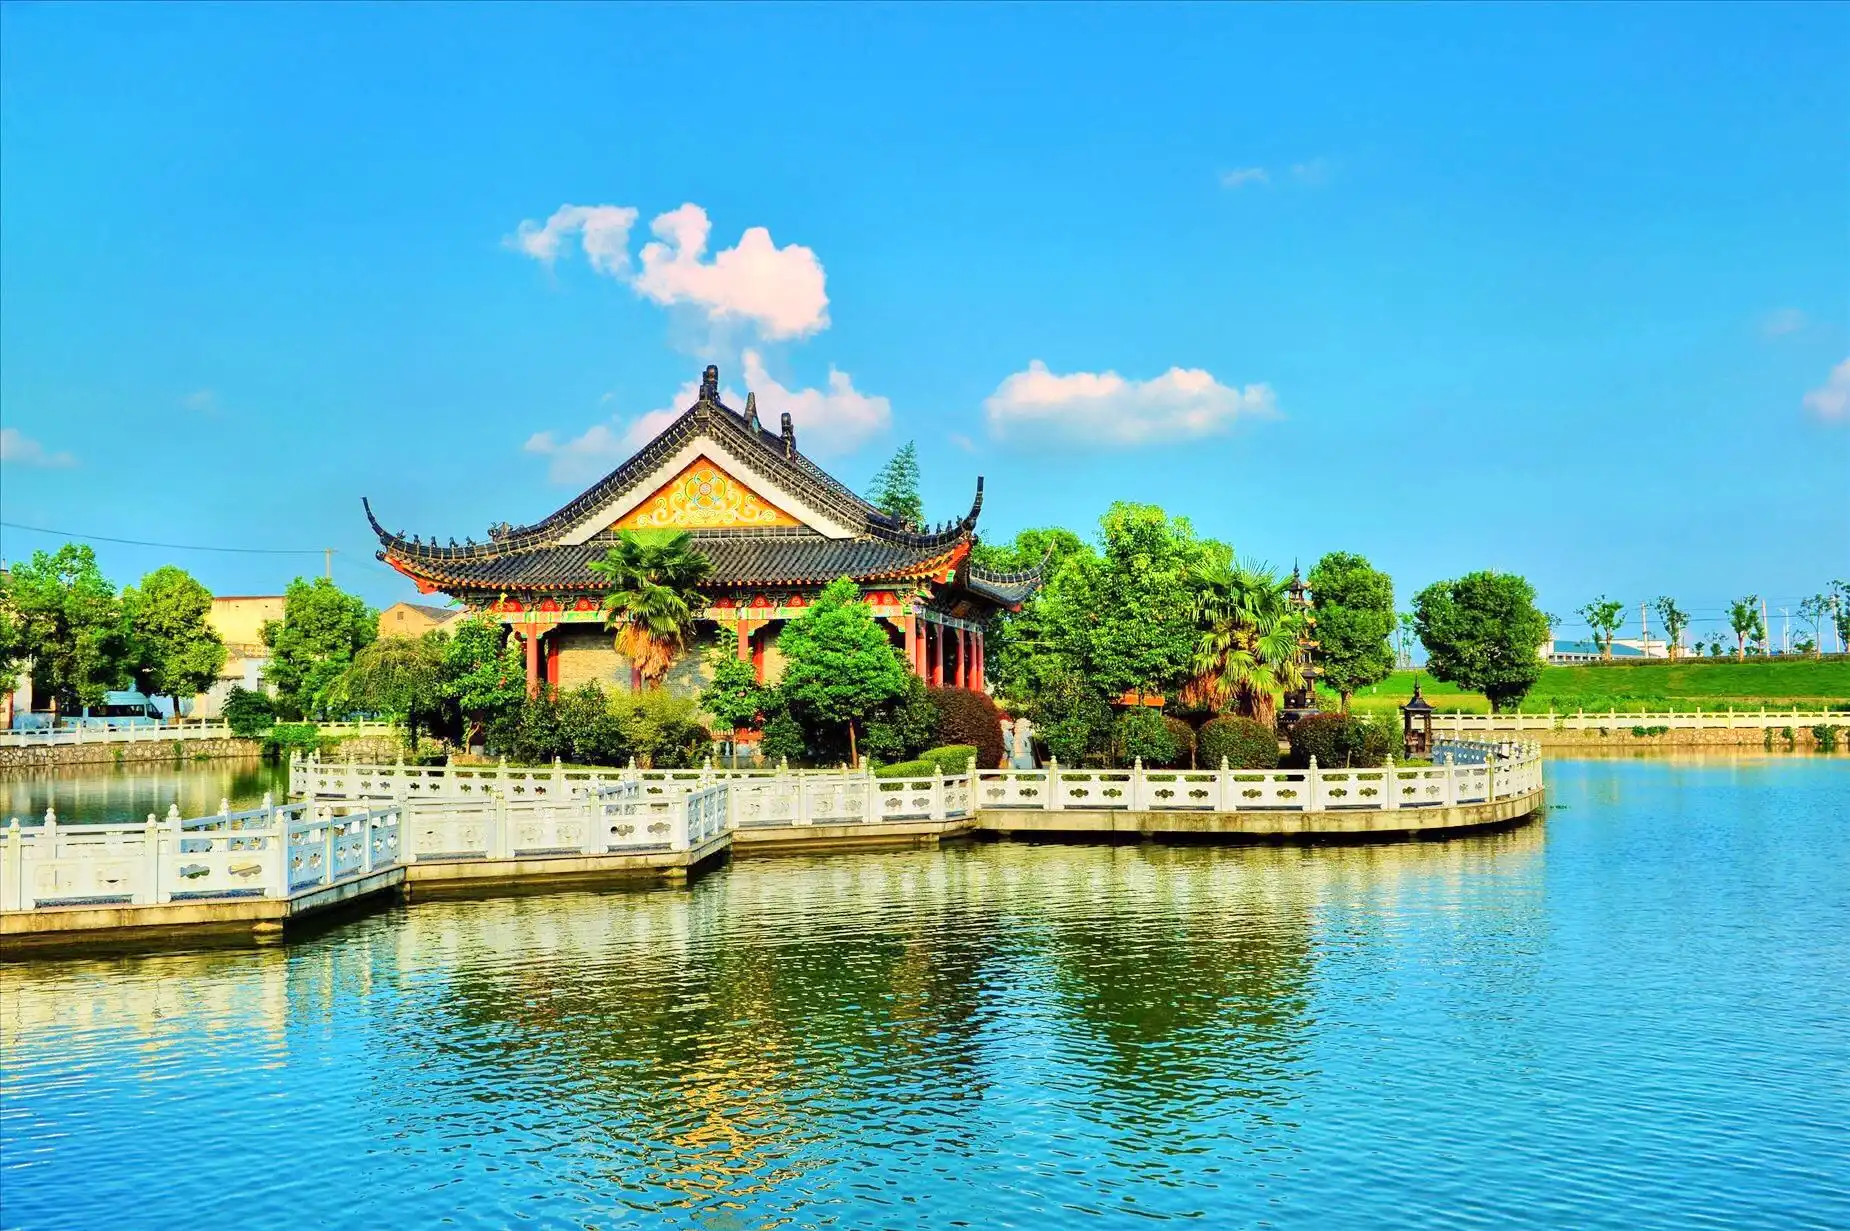 Danyang tourism